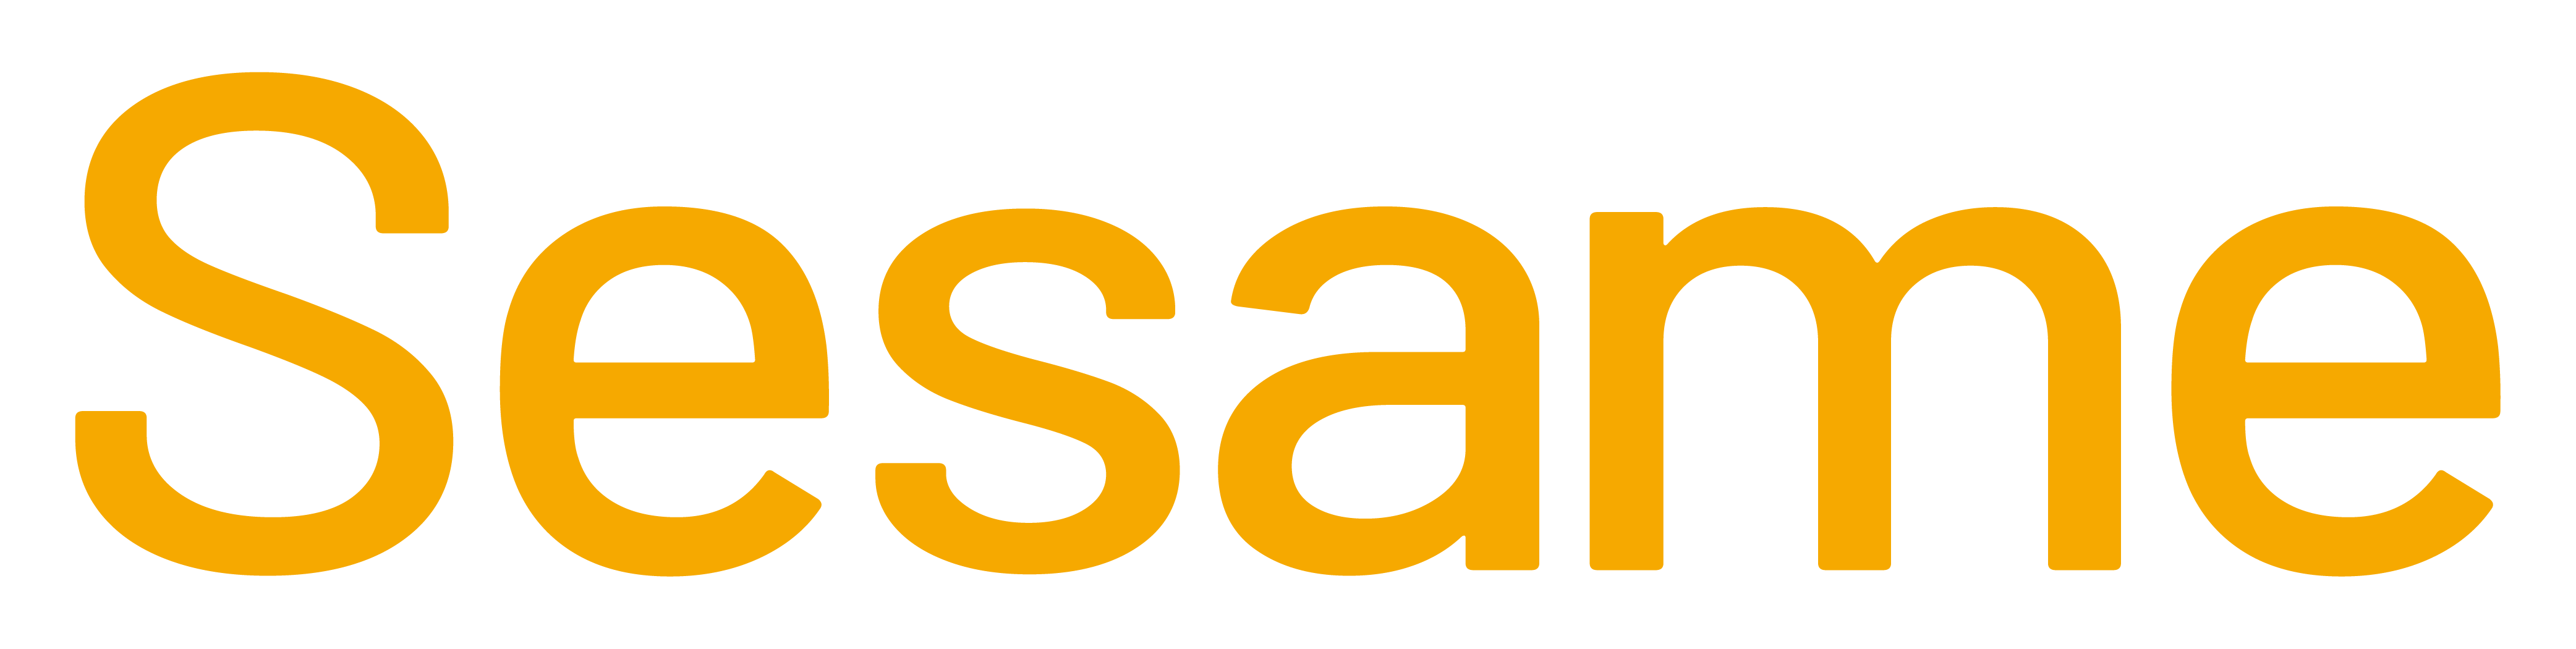 sesame-logo